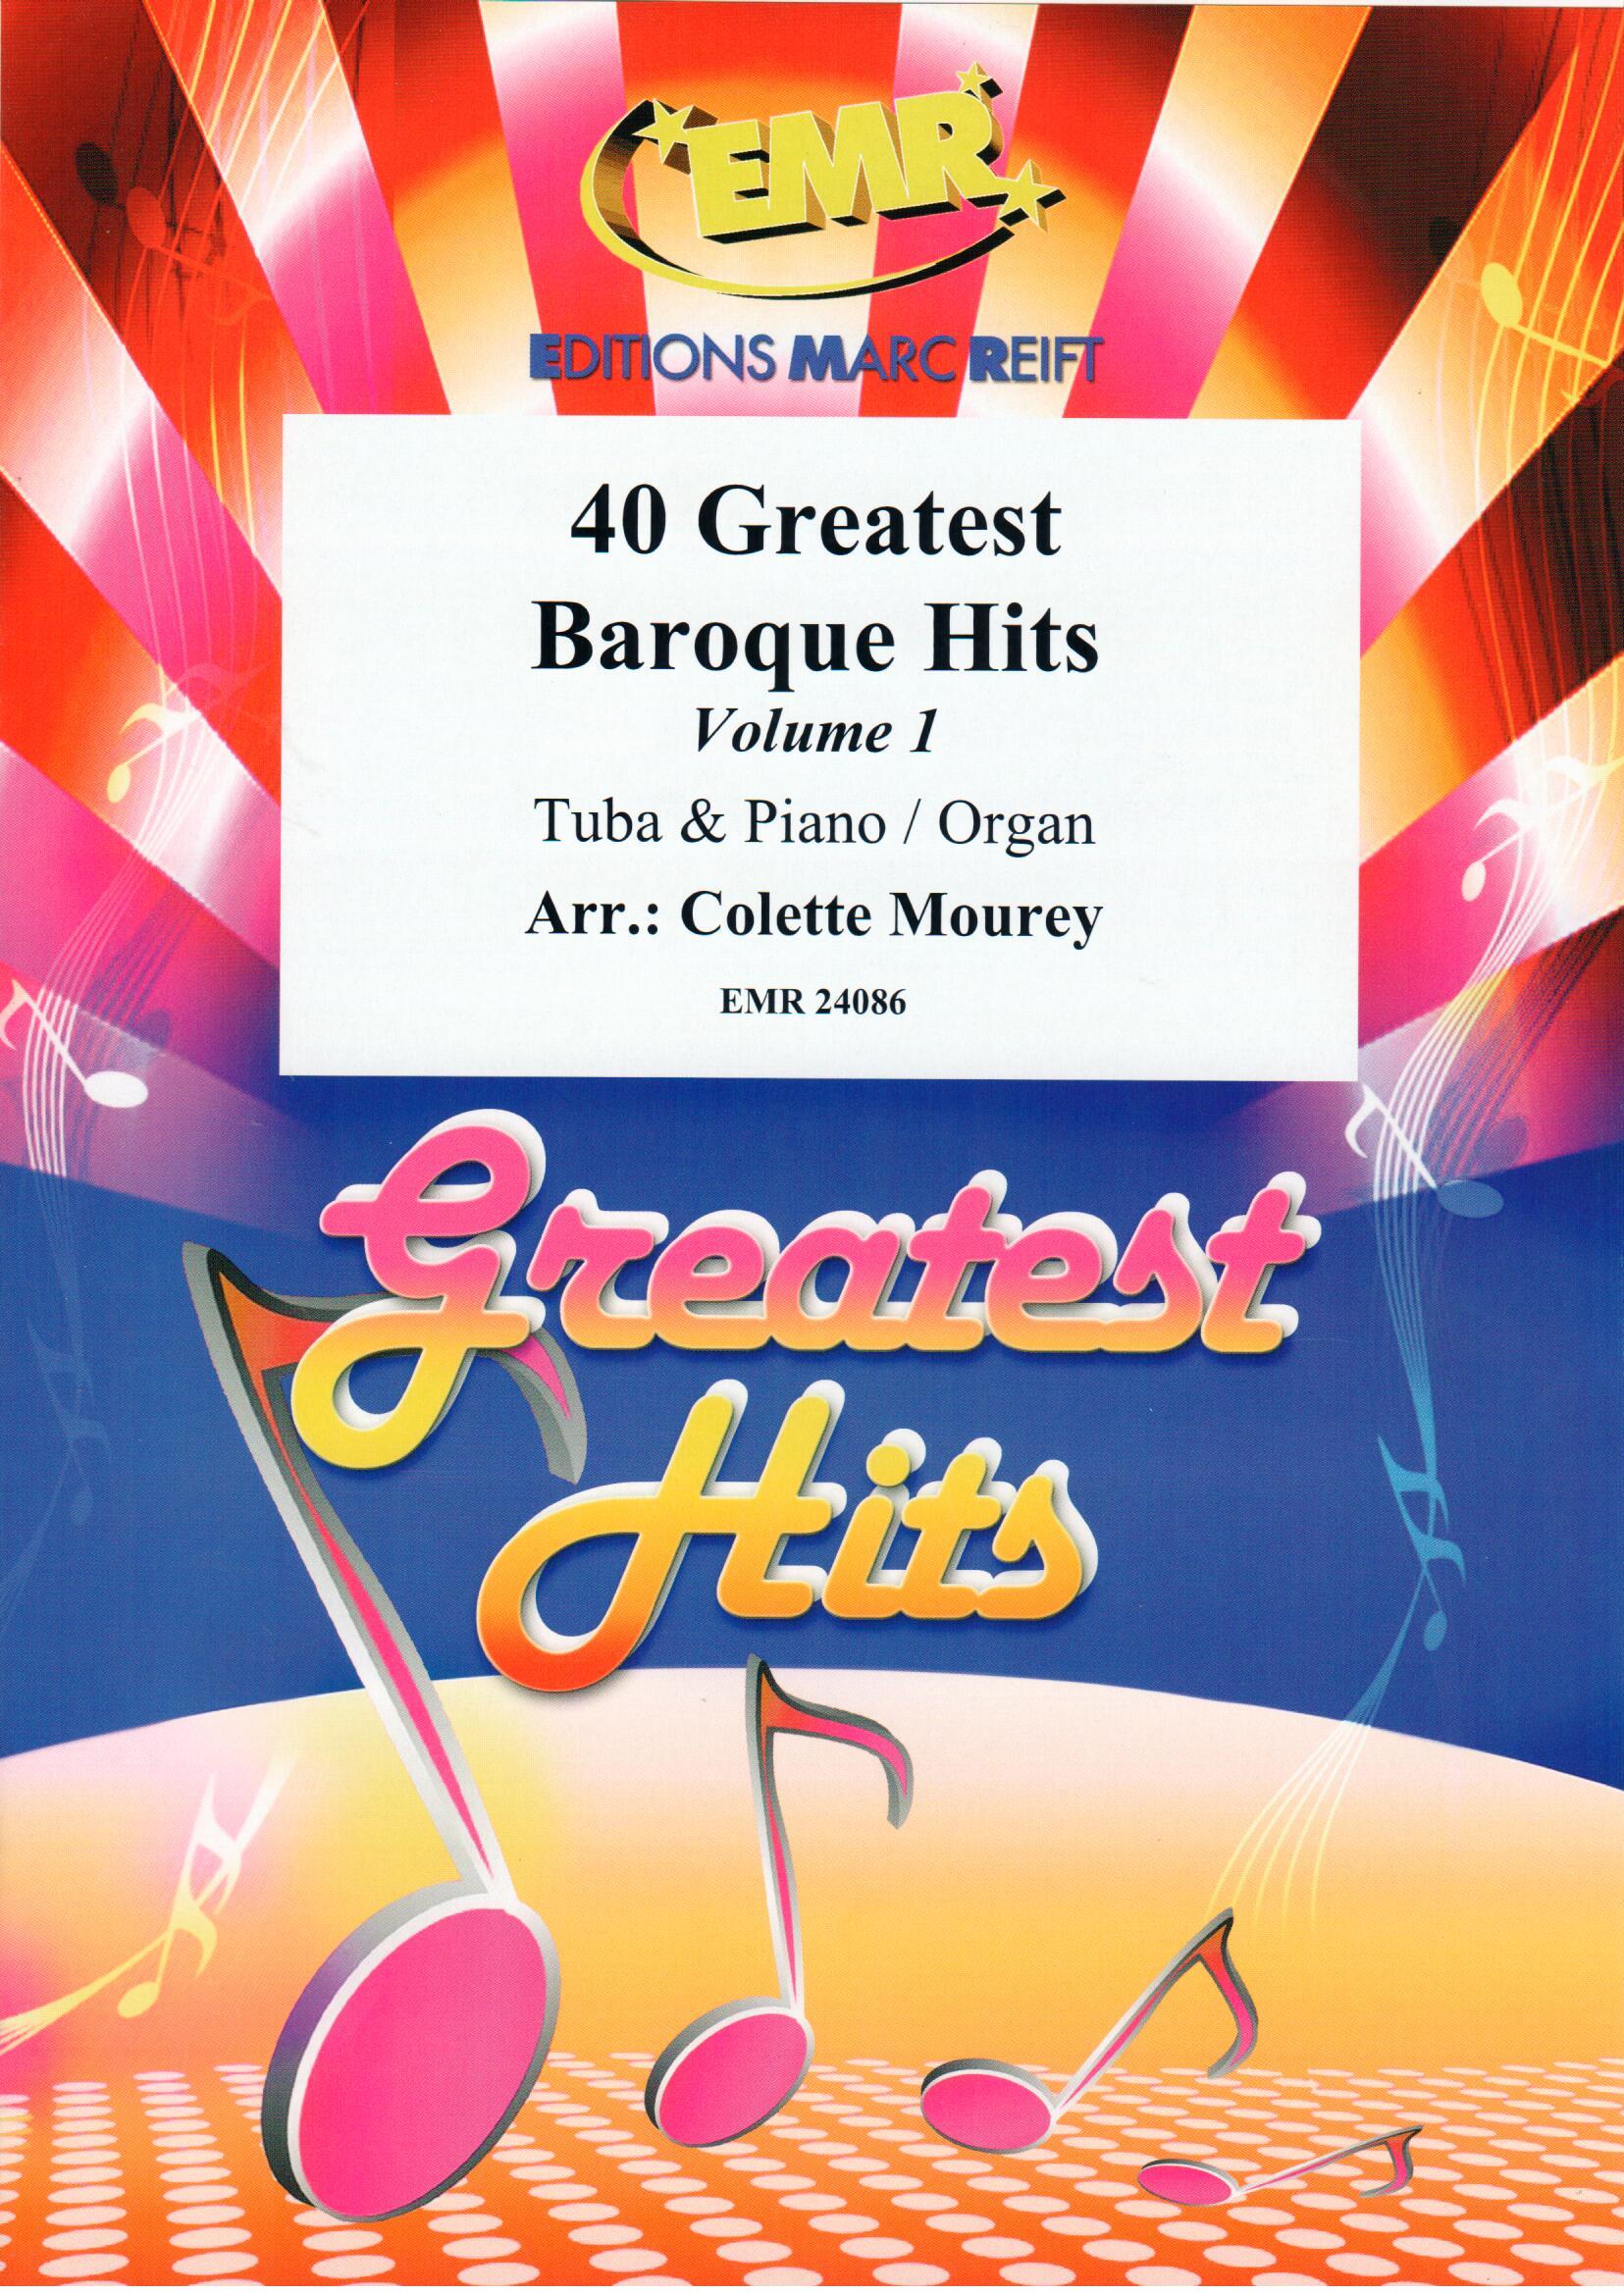 40 GREATEST BAROQUE HITS VOLUME 1, SOLOS - E♭. Bass